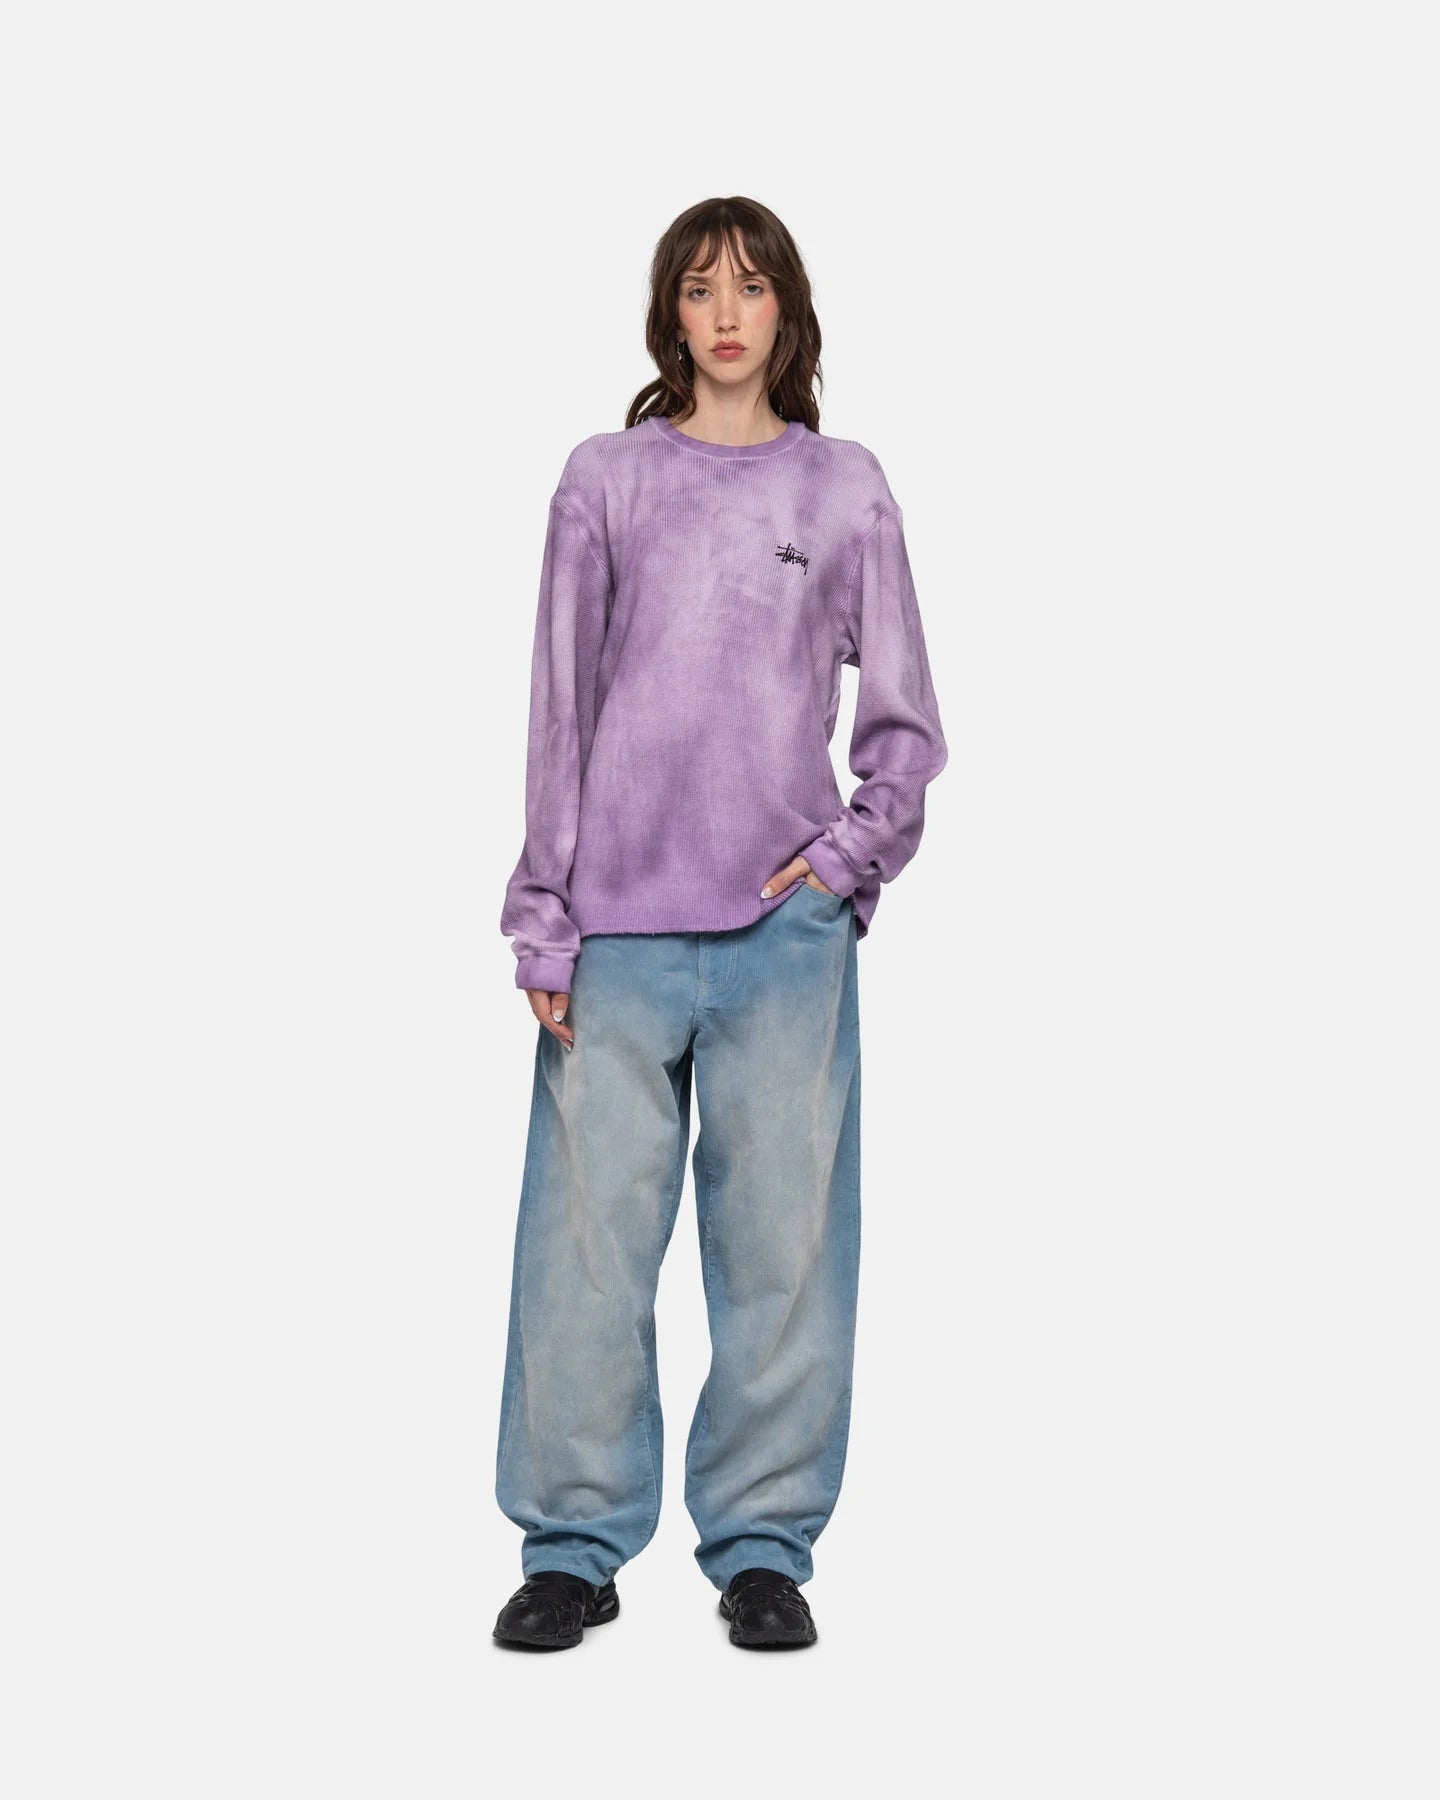 Stüssy Basic Stock Thermal Crewneck Sweater Lavender